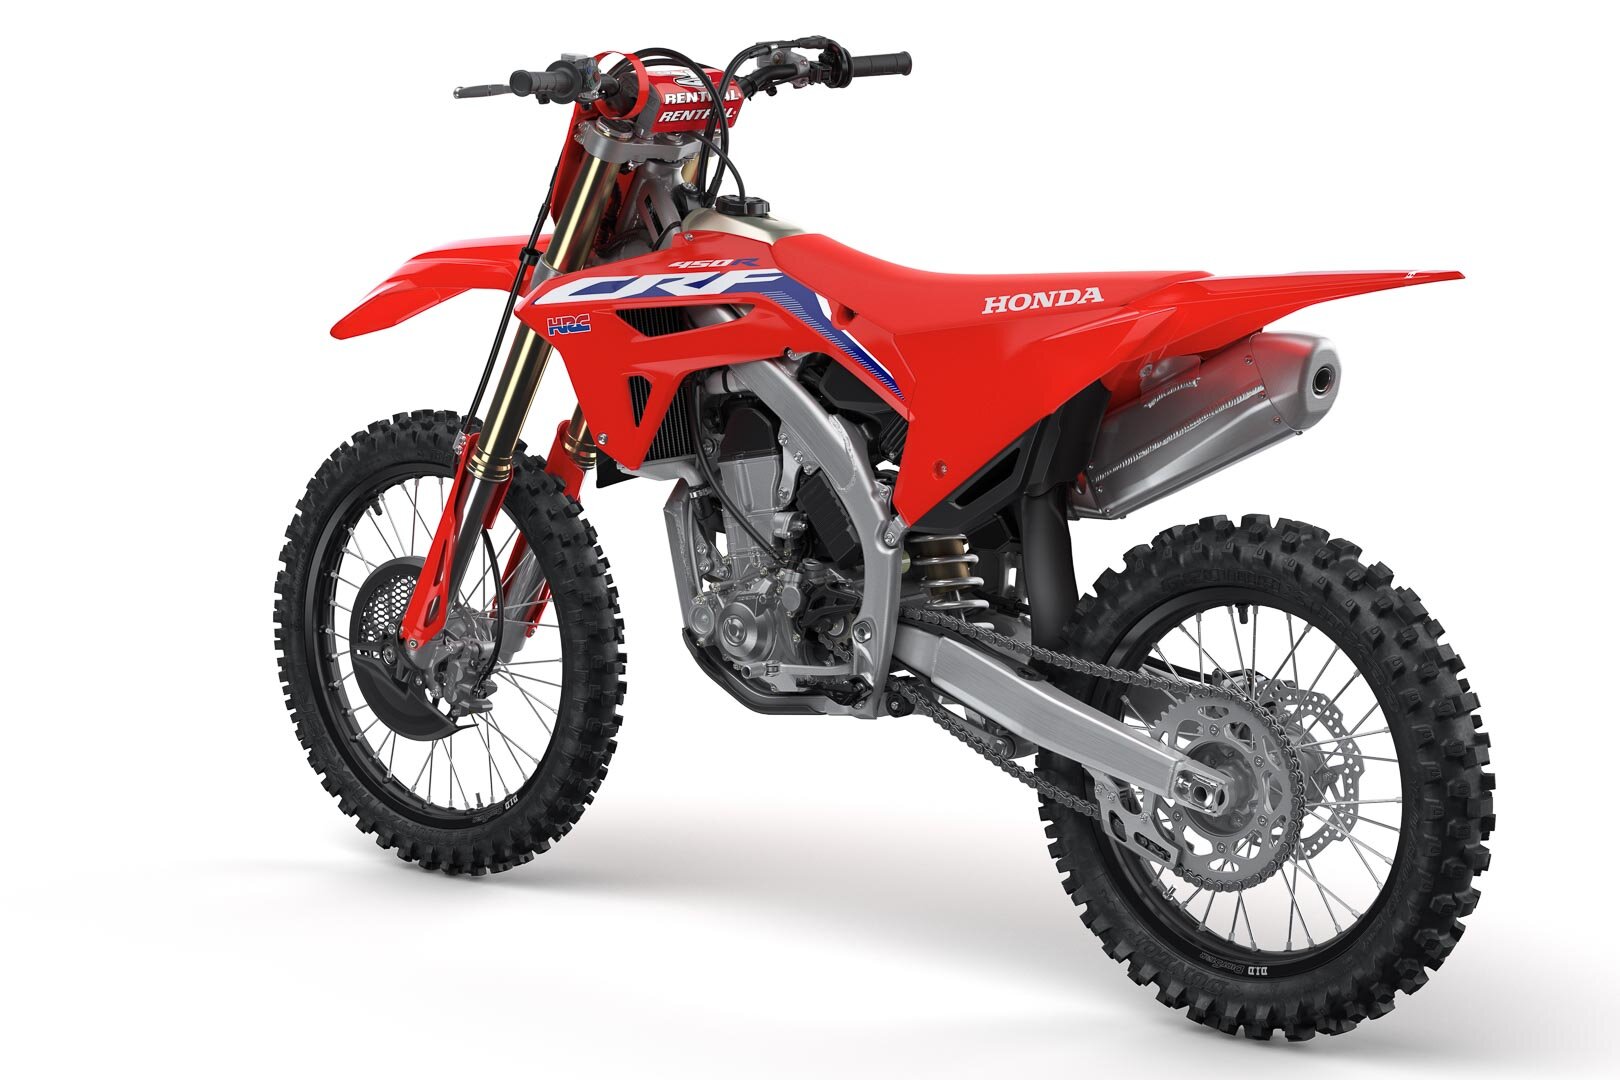 2021-Honda-CRF450R-First-Look-motocross-supercross-motorcycle-6.jpg